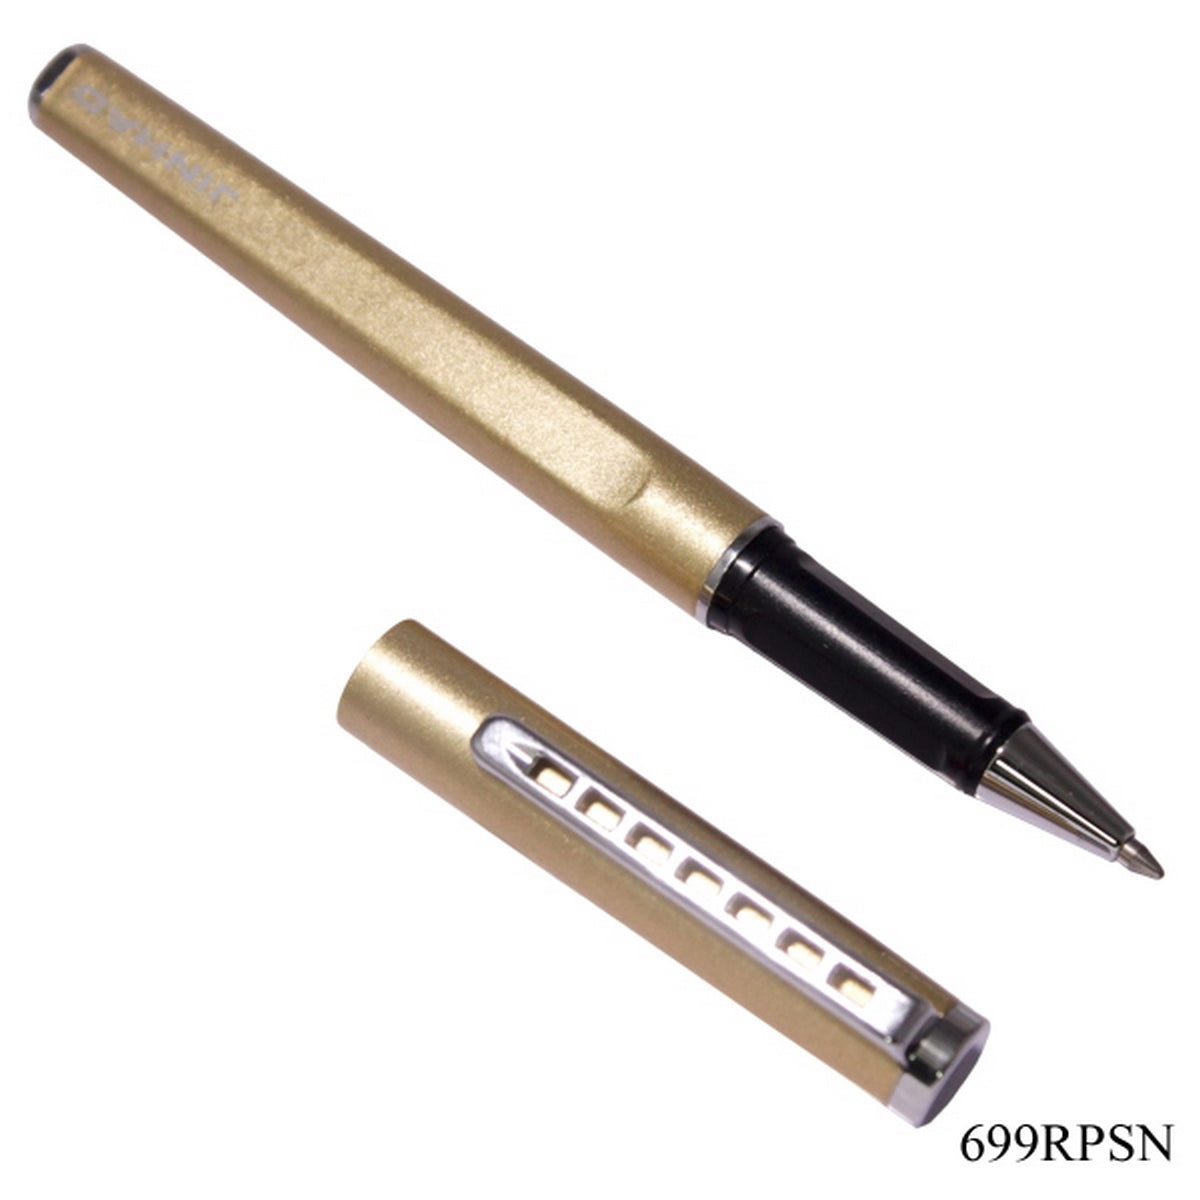 jags-mumbai Roller Pens Roller Pen Skin 699RPSN